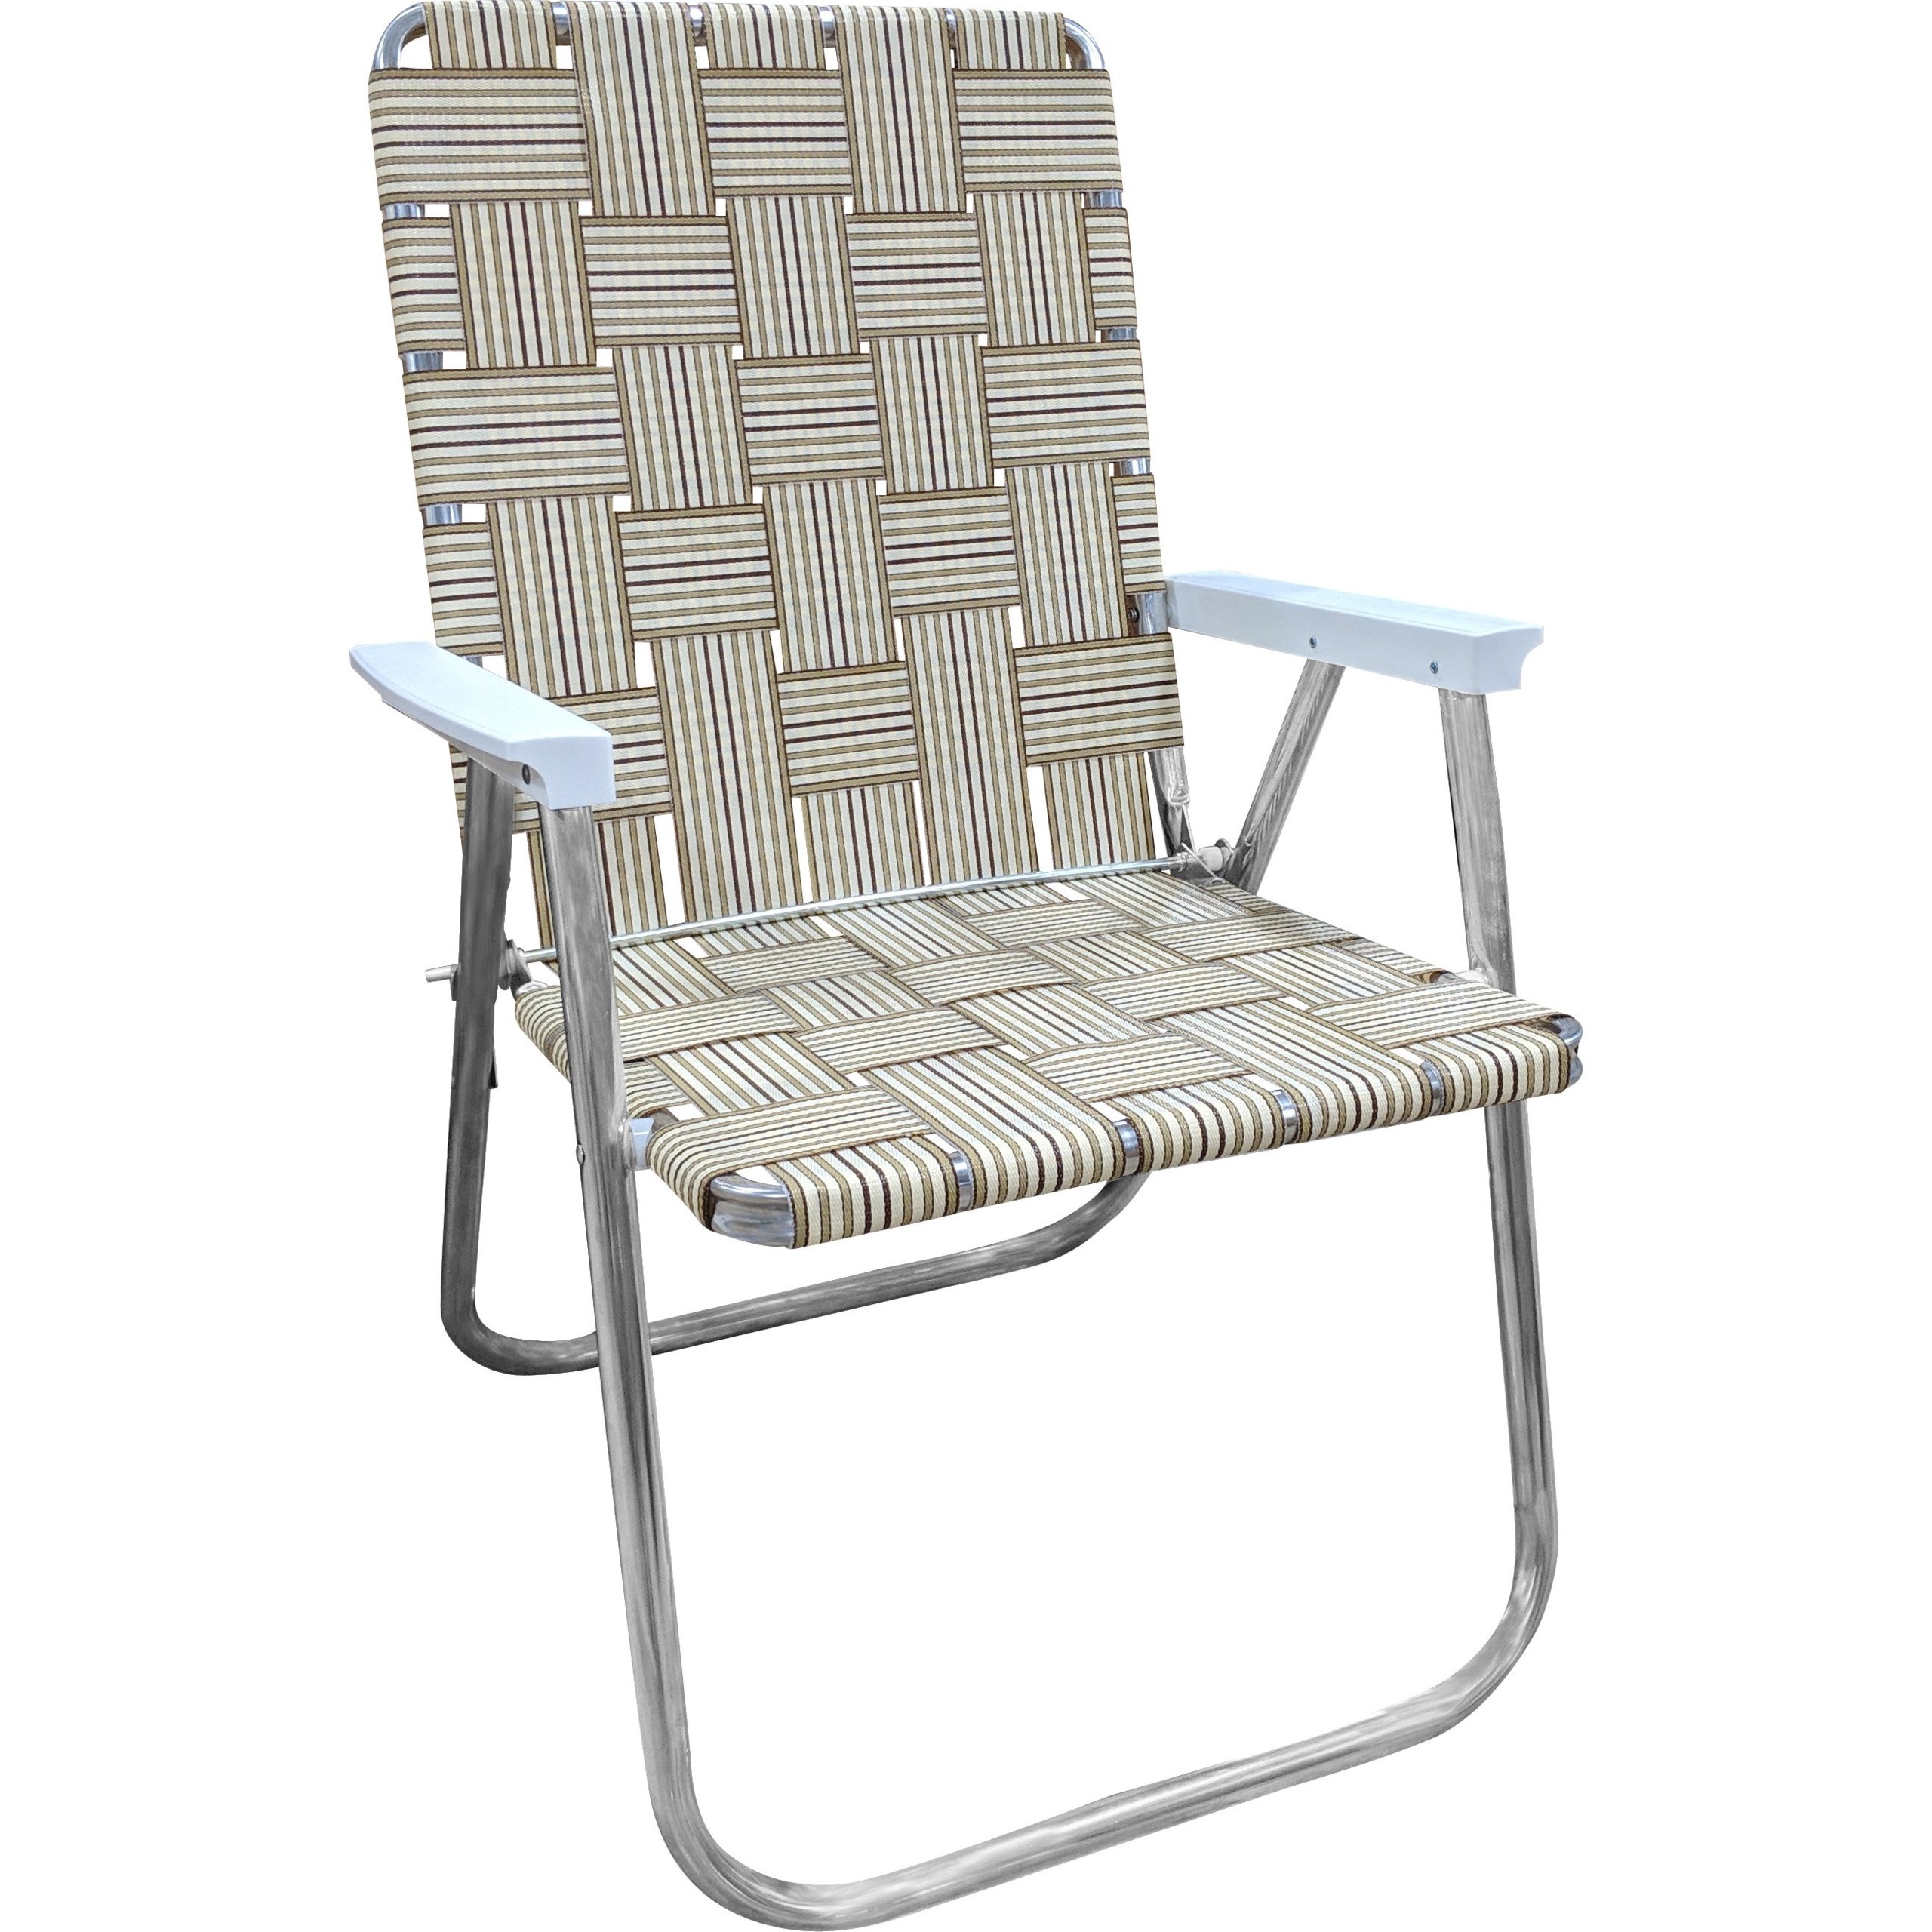 Lawn chair usa folding aluminum webbing chair walmart